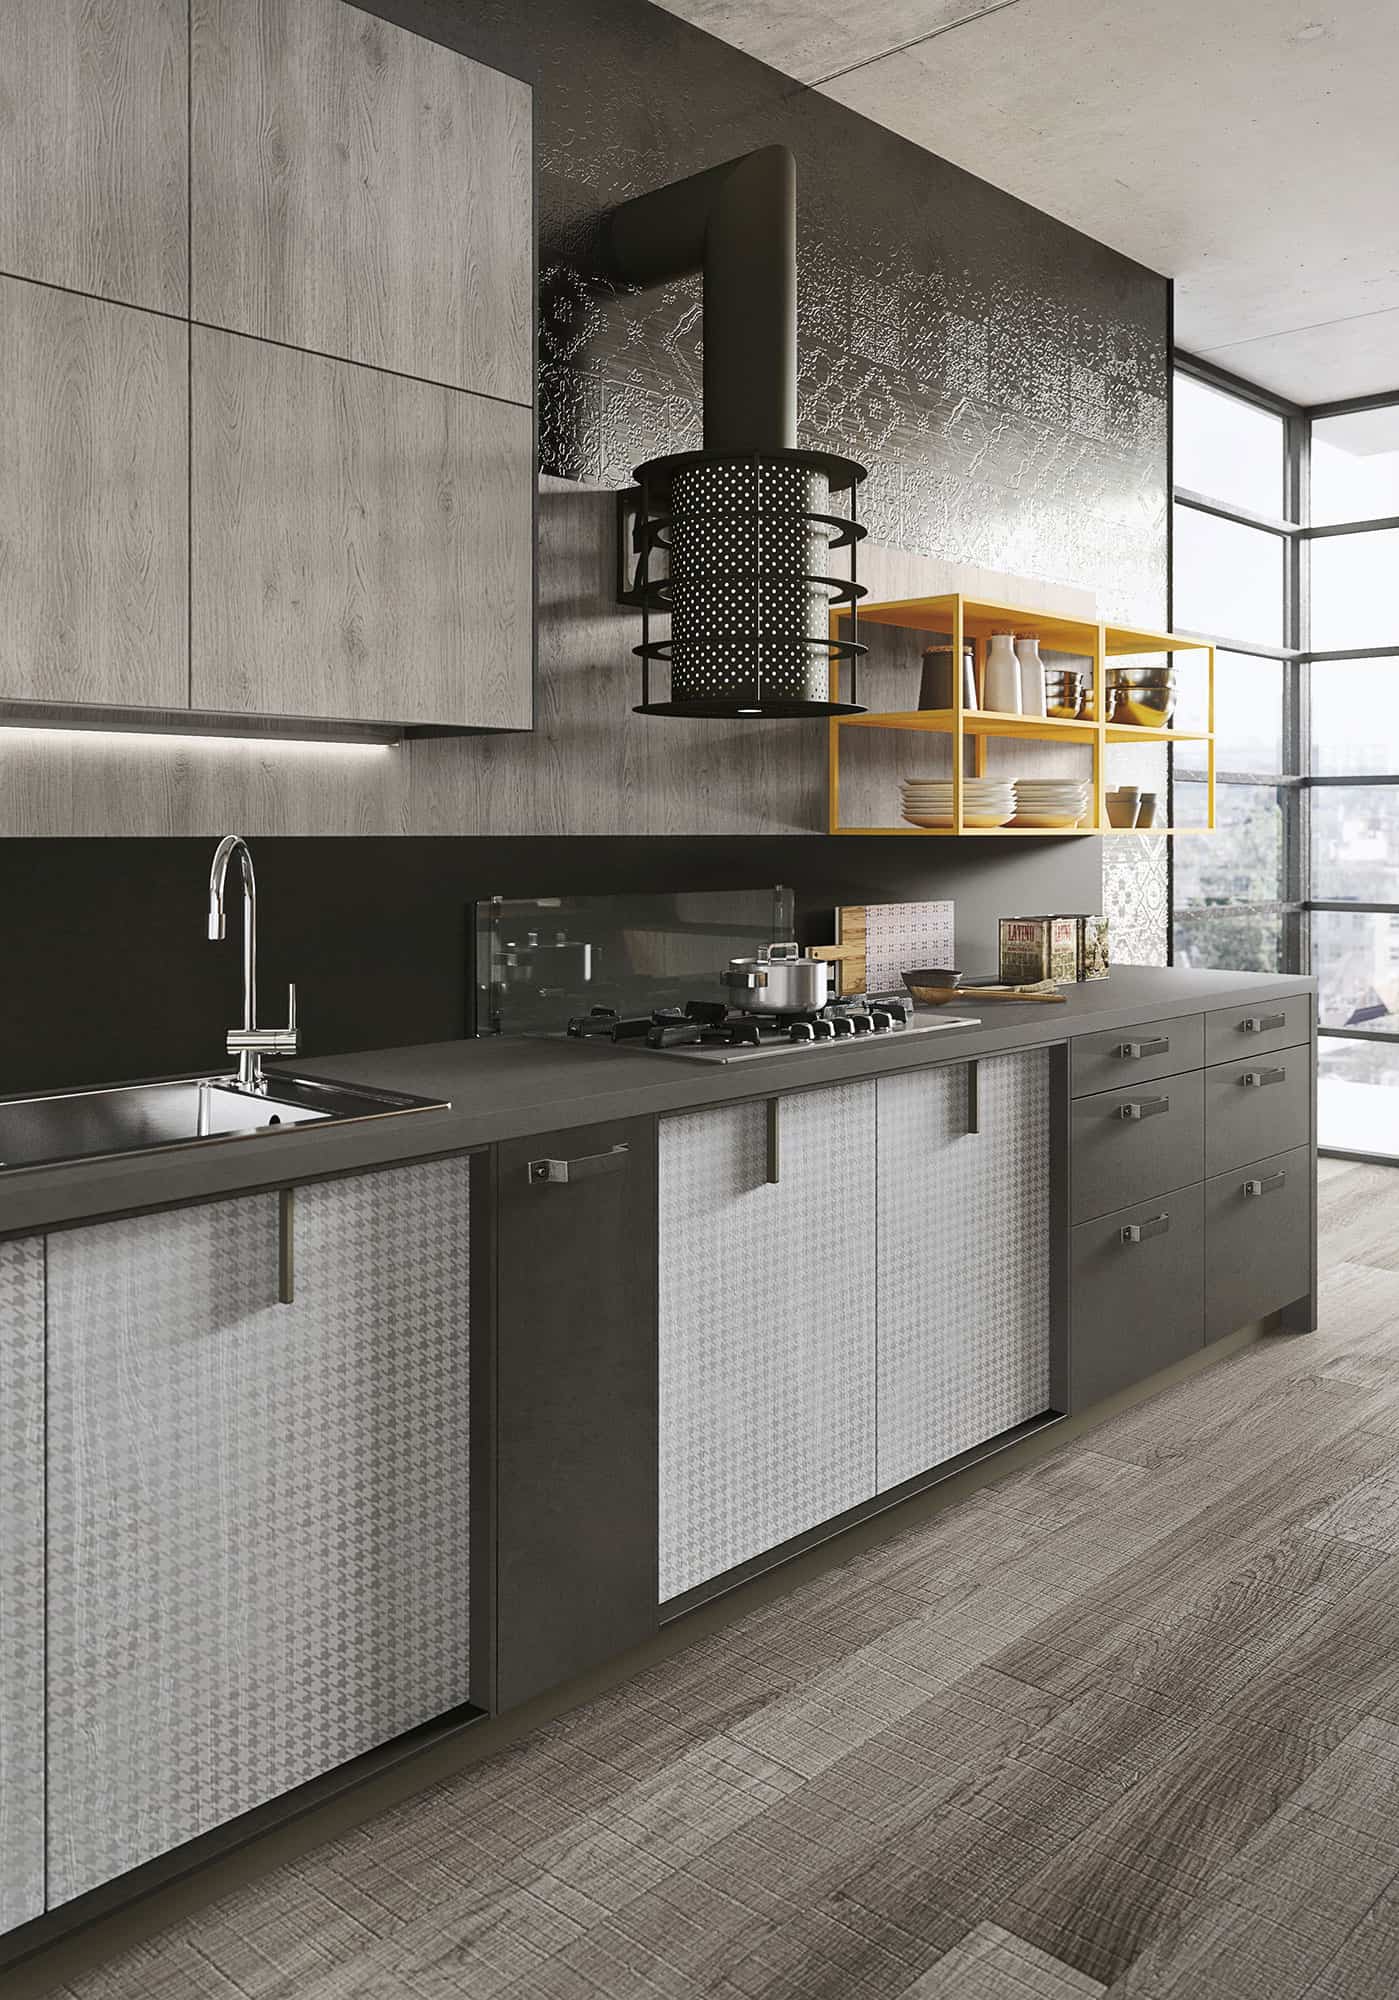 19-kitchen-design-lofts-3-urban-ideas-snaidero.jpg